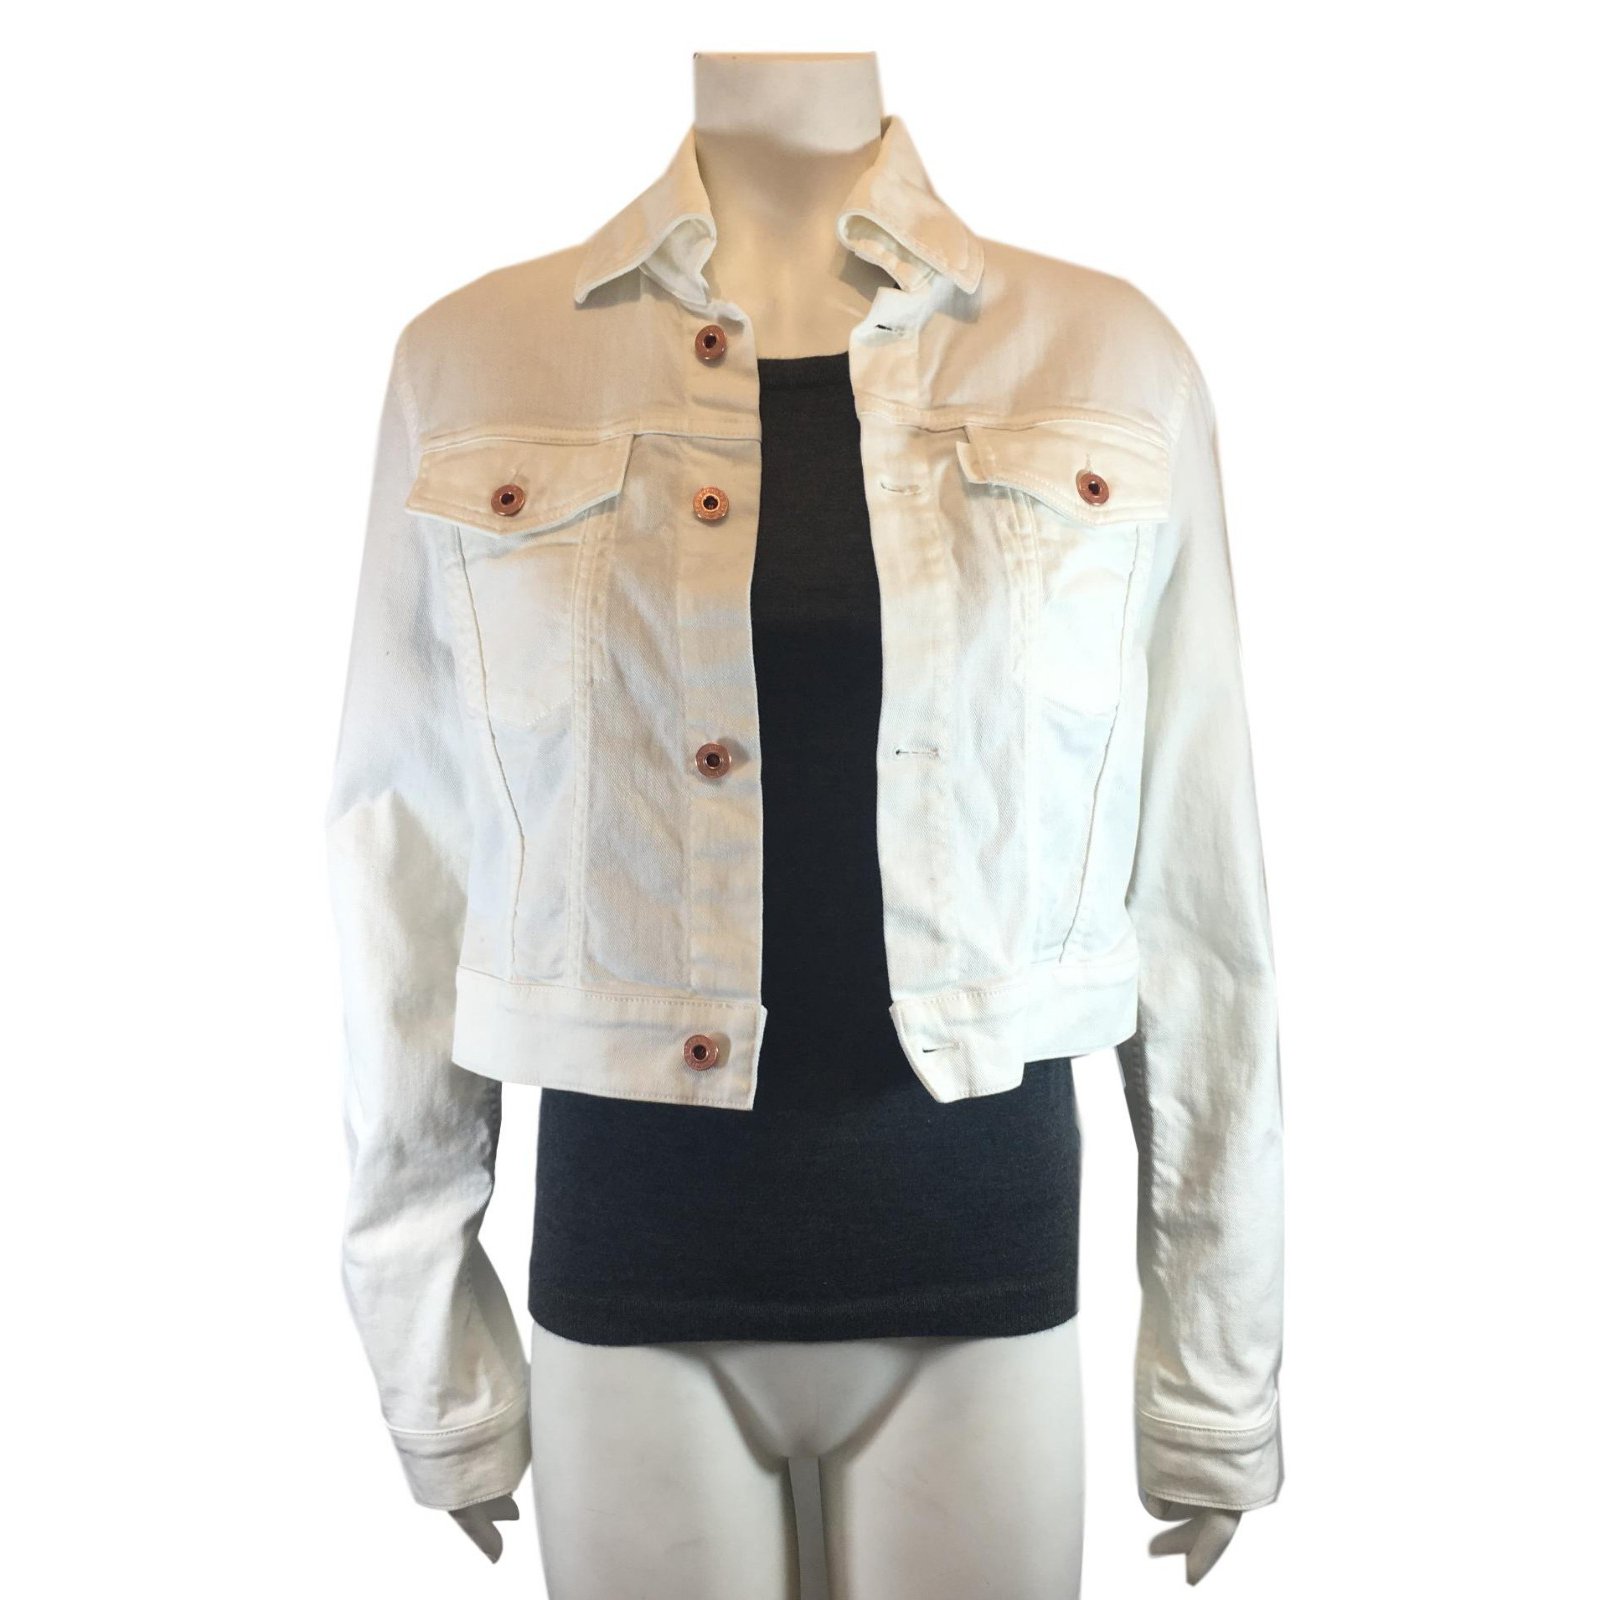 Designer Embroidered Denim Jacket For Women Fashionable Short Coat With  Letter Motif, Casual Blue Jean Cardigan Top From Designer_dhgate, $87.08 |  DHgate.Com